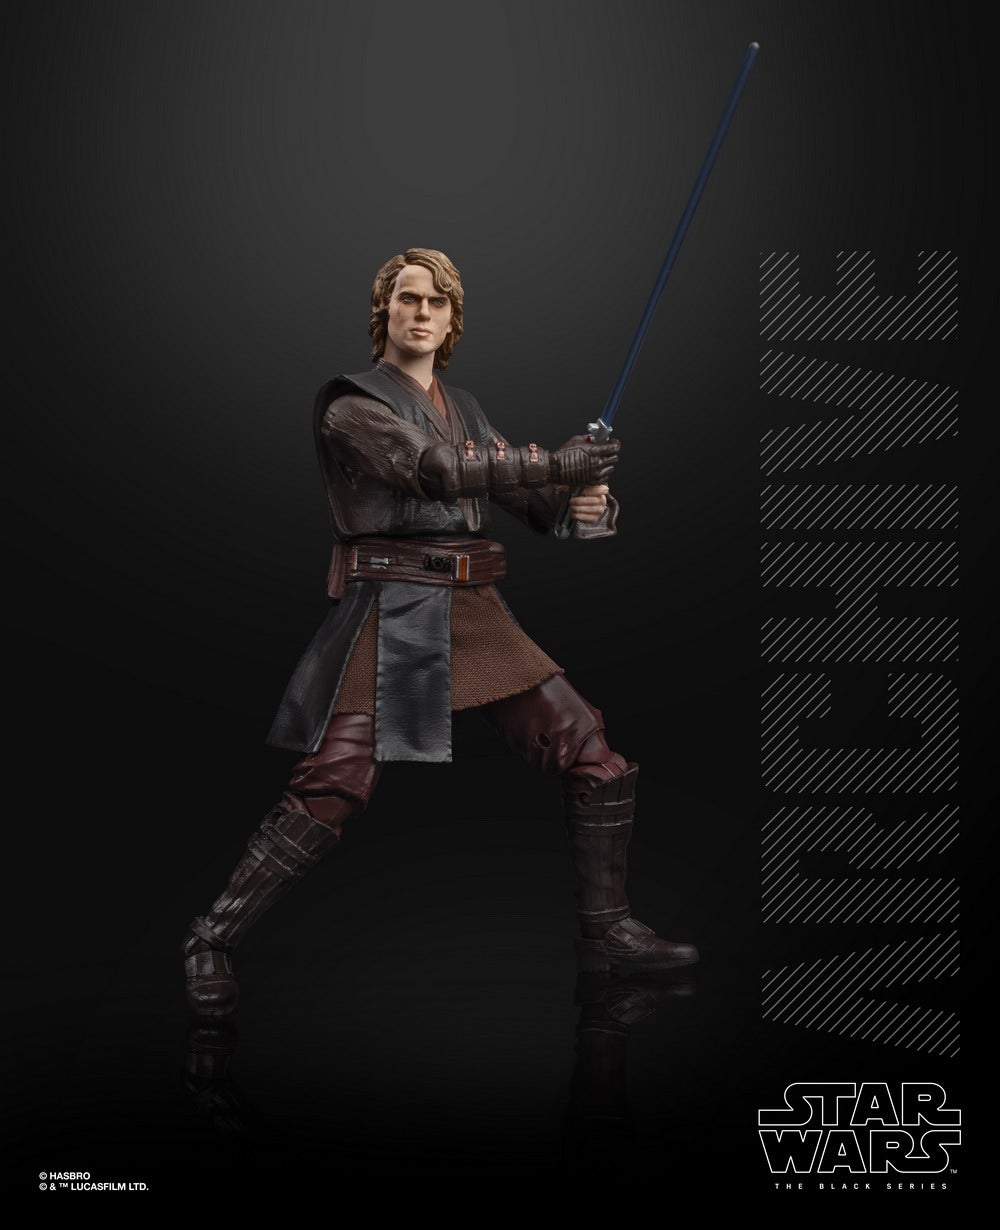 STAR WARS THE BLACK SERIES ARCHIVE 6-INCH Figure Assortment - Anakin Skywalker (oop 1)